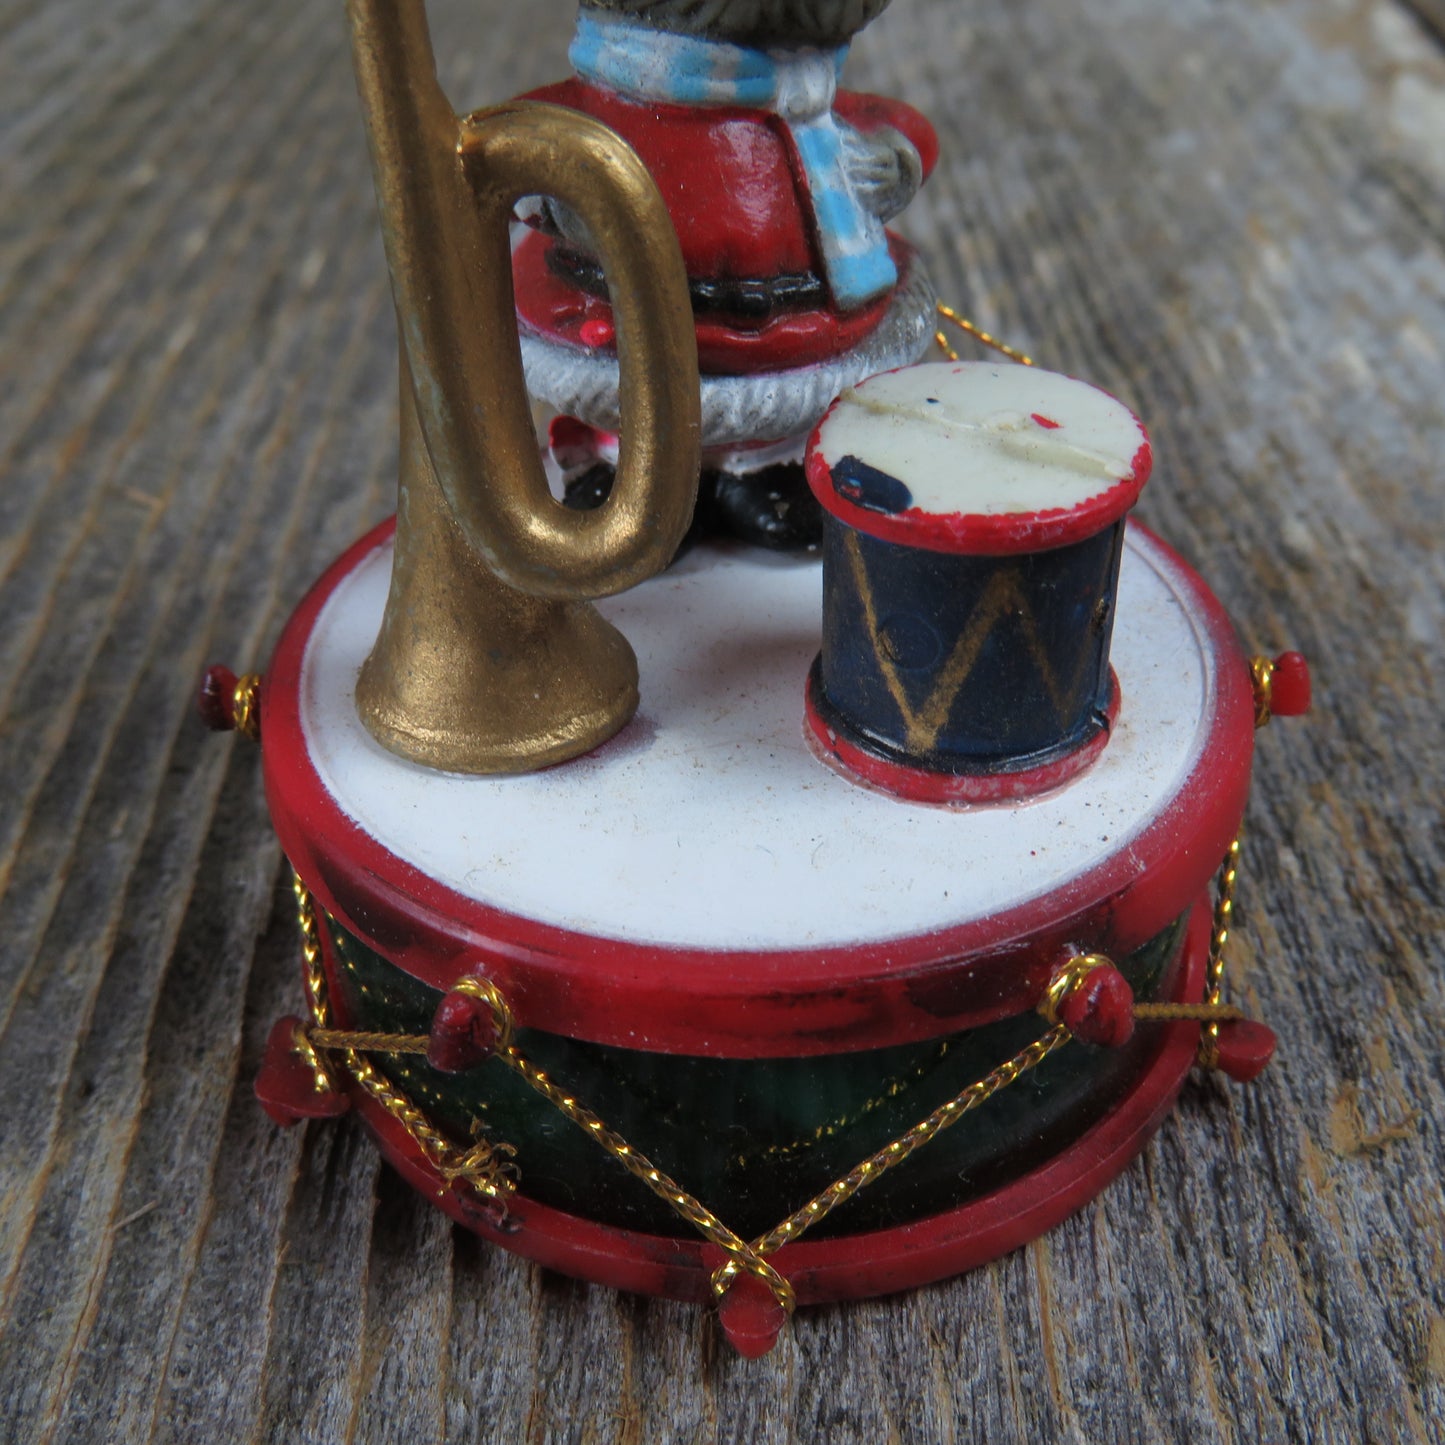 Vintage Mouse Drum Horn Christmas Ornament Plastic Trumpet Santa Suit Holiday Decor - At Grandma's Table